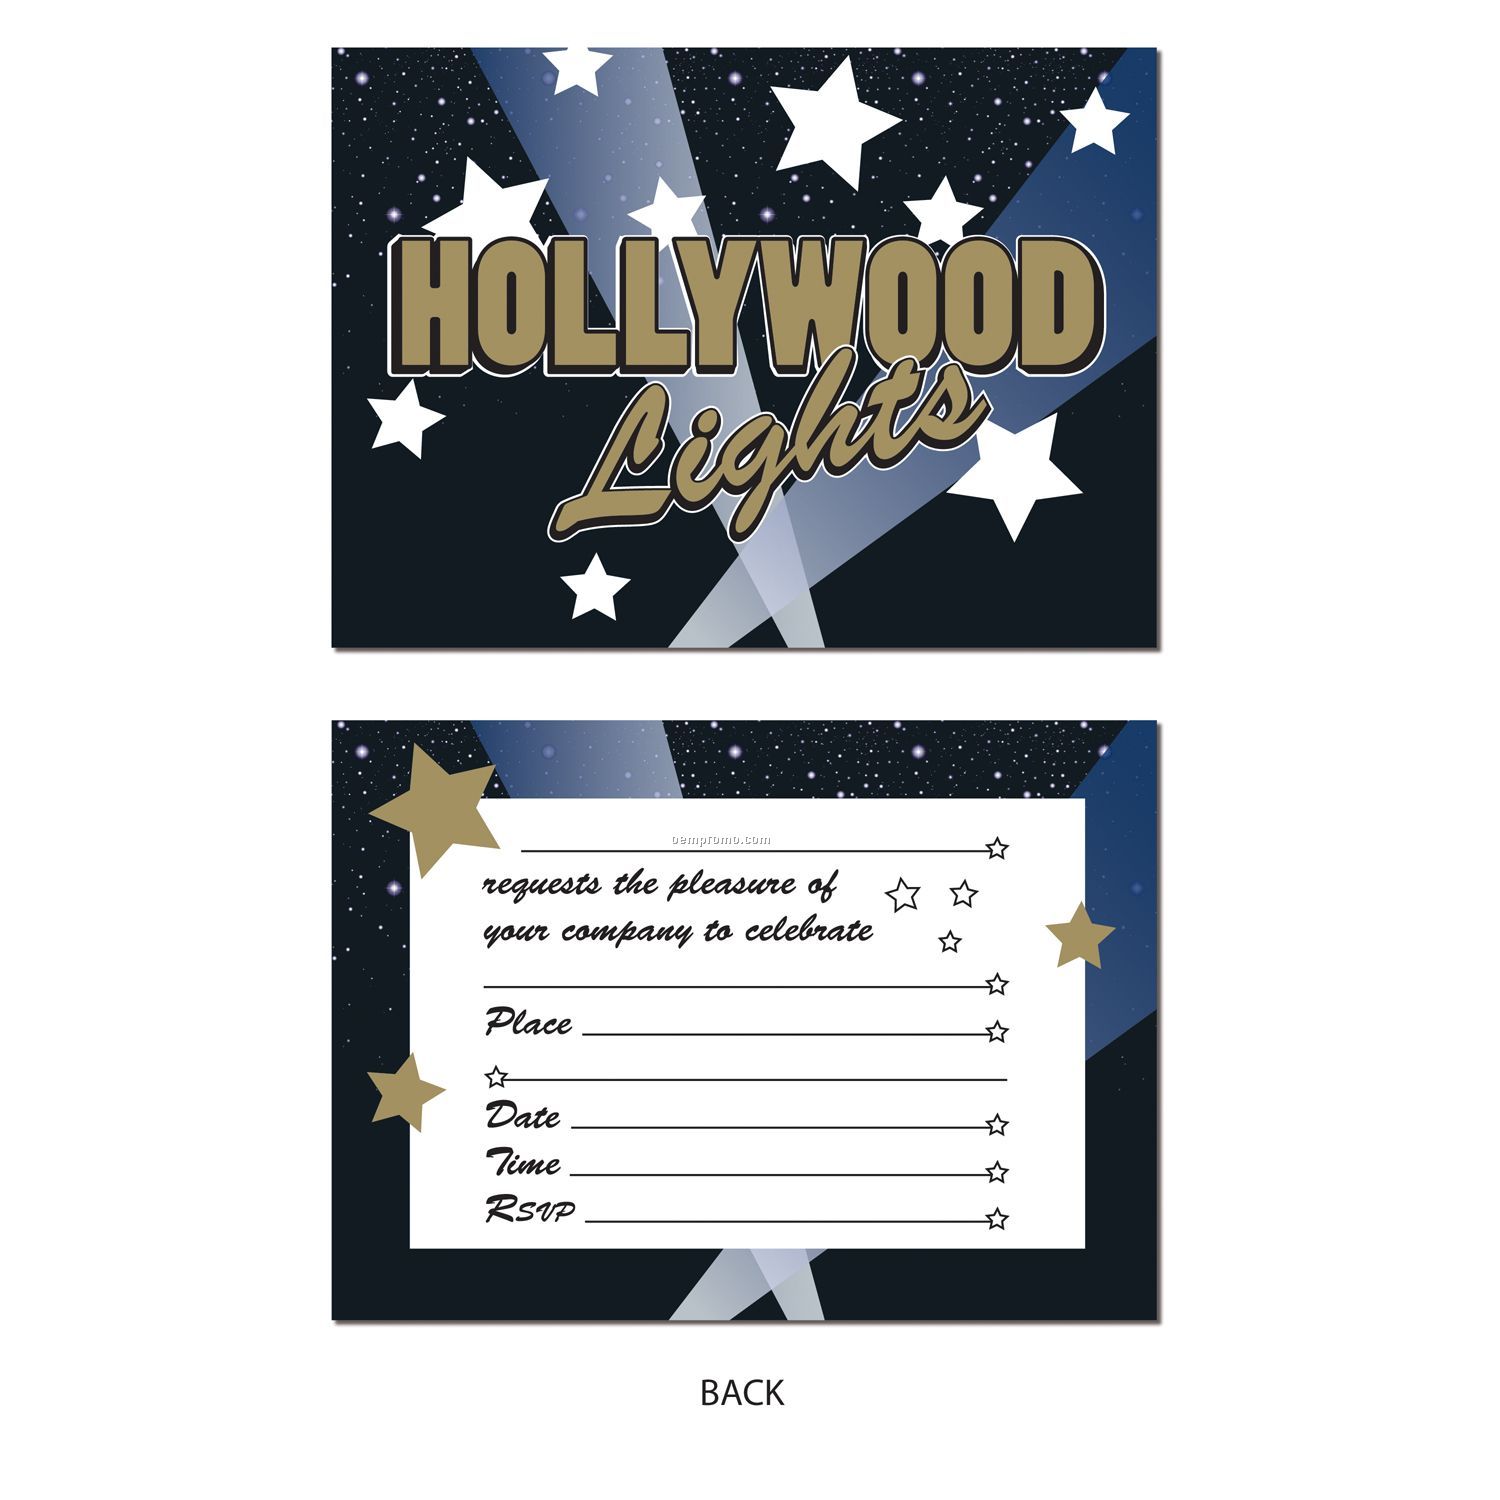 Hollywood Lights Invitations